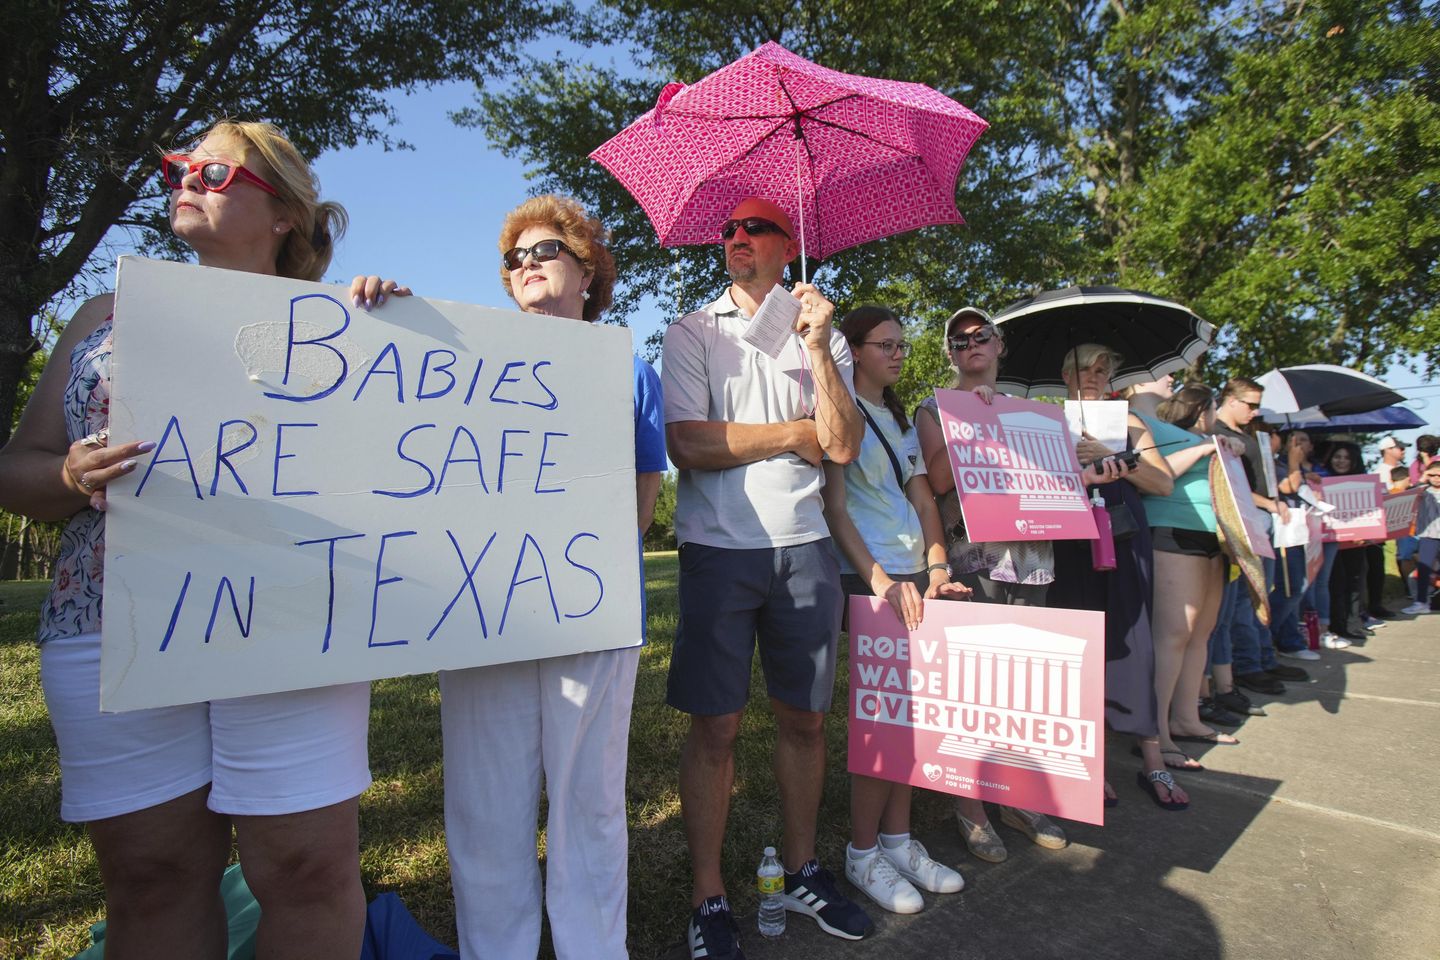 Wanita Texas menggugat kematian yang salah setelah membantu aborsi